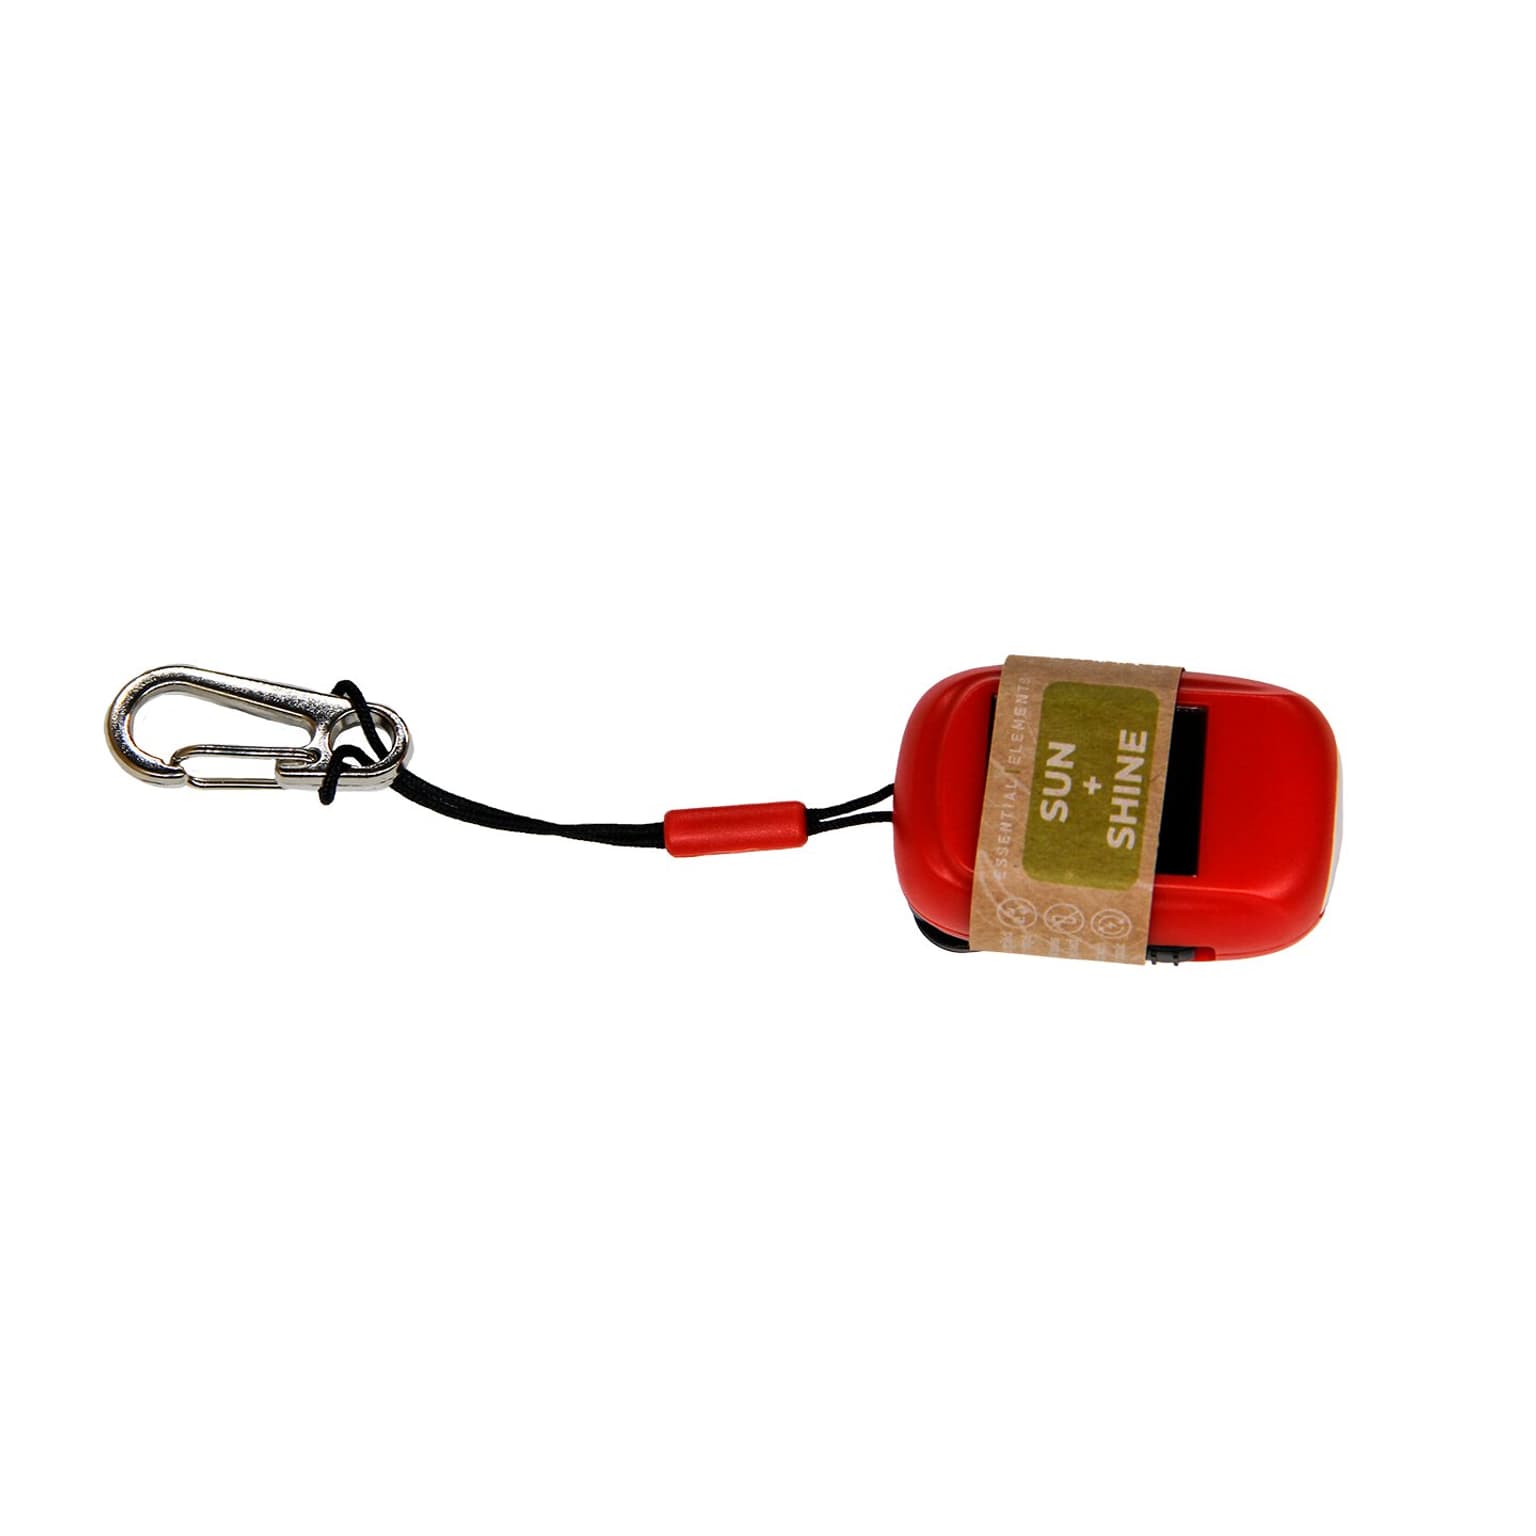 Essential Elements Essential Elements Mini Taschenlampe Recycled inkl. Karabiner Taschenlampe rosso 2